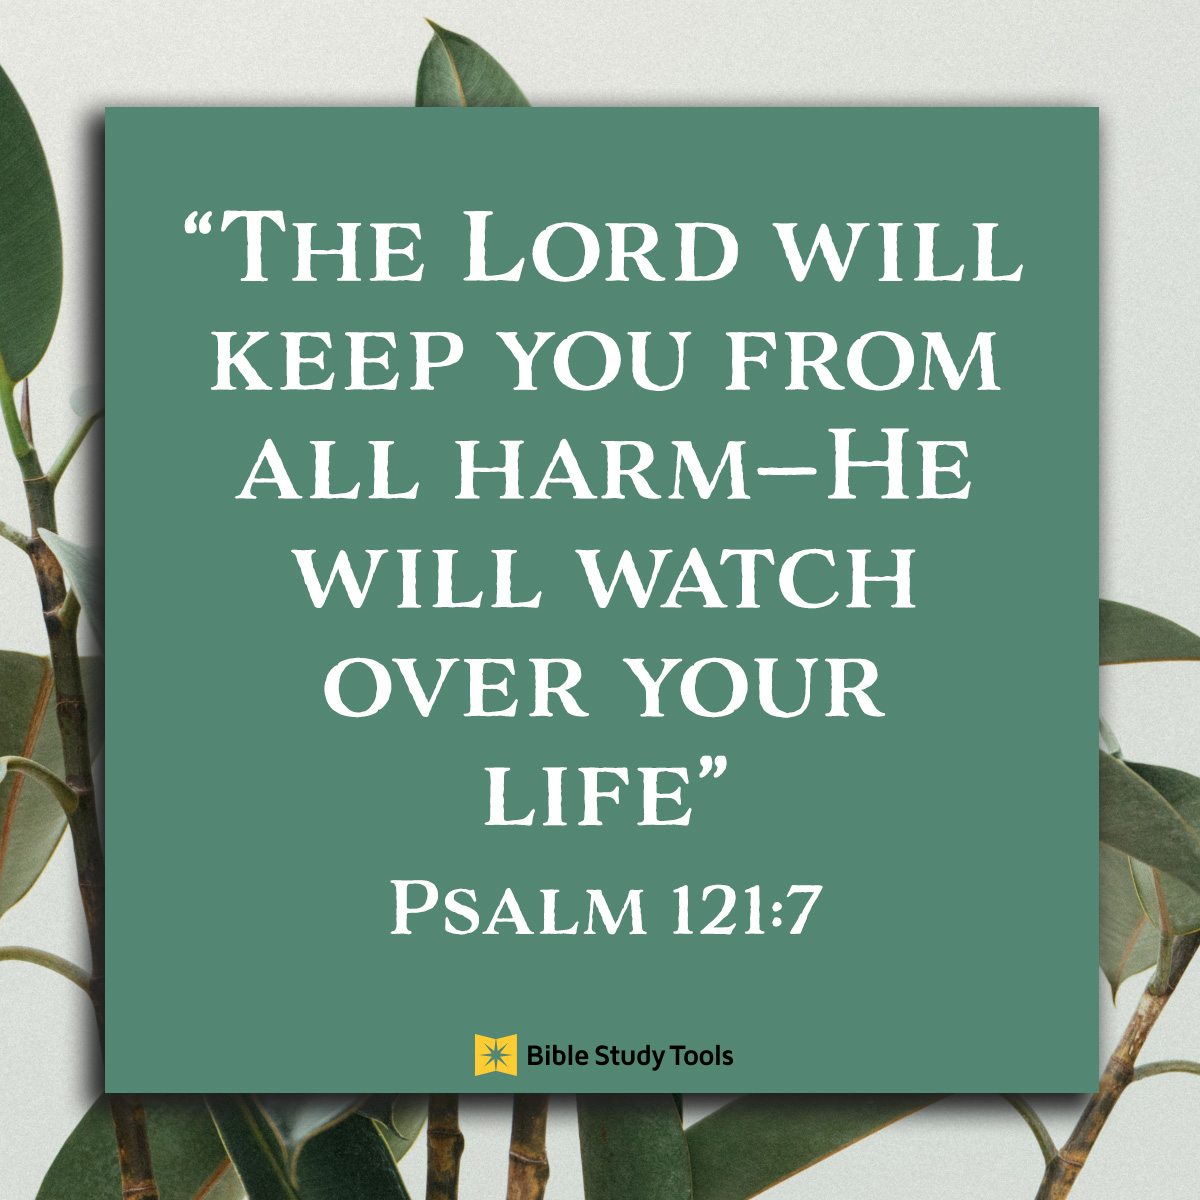 Psalm 121:7, inspirational image